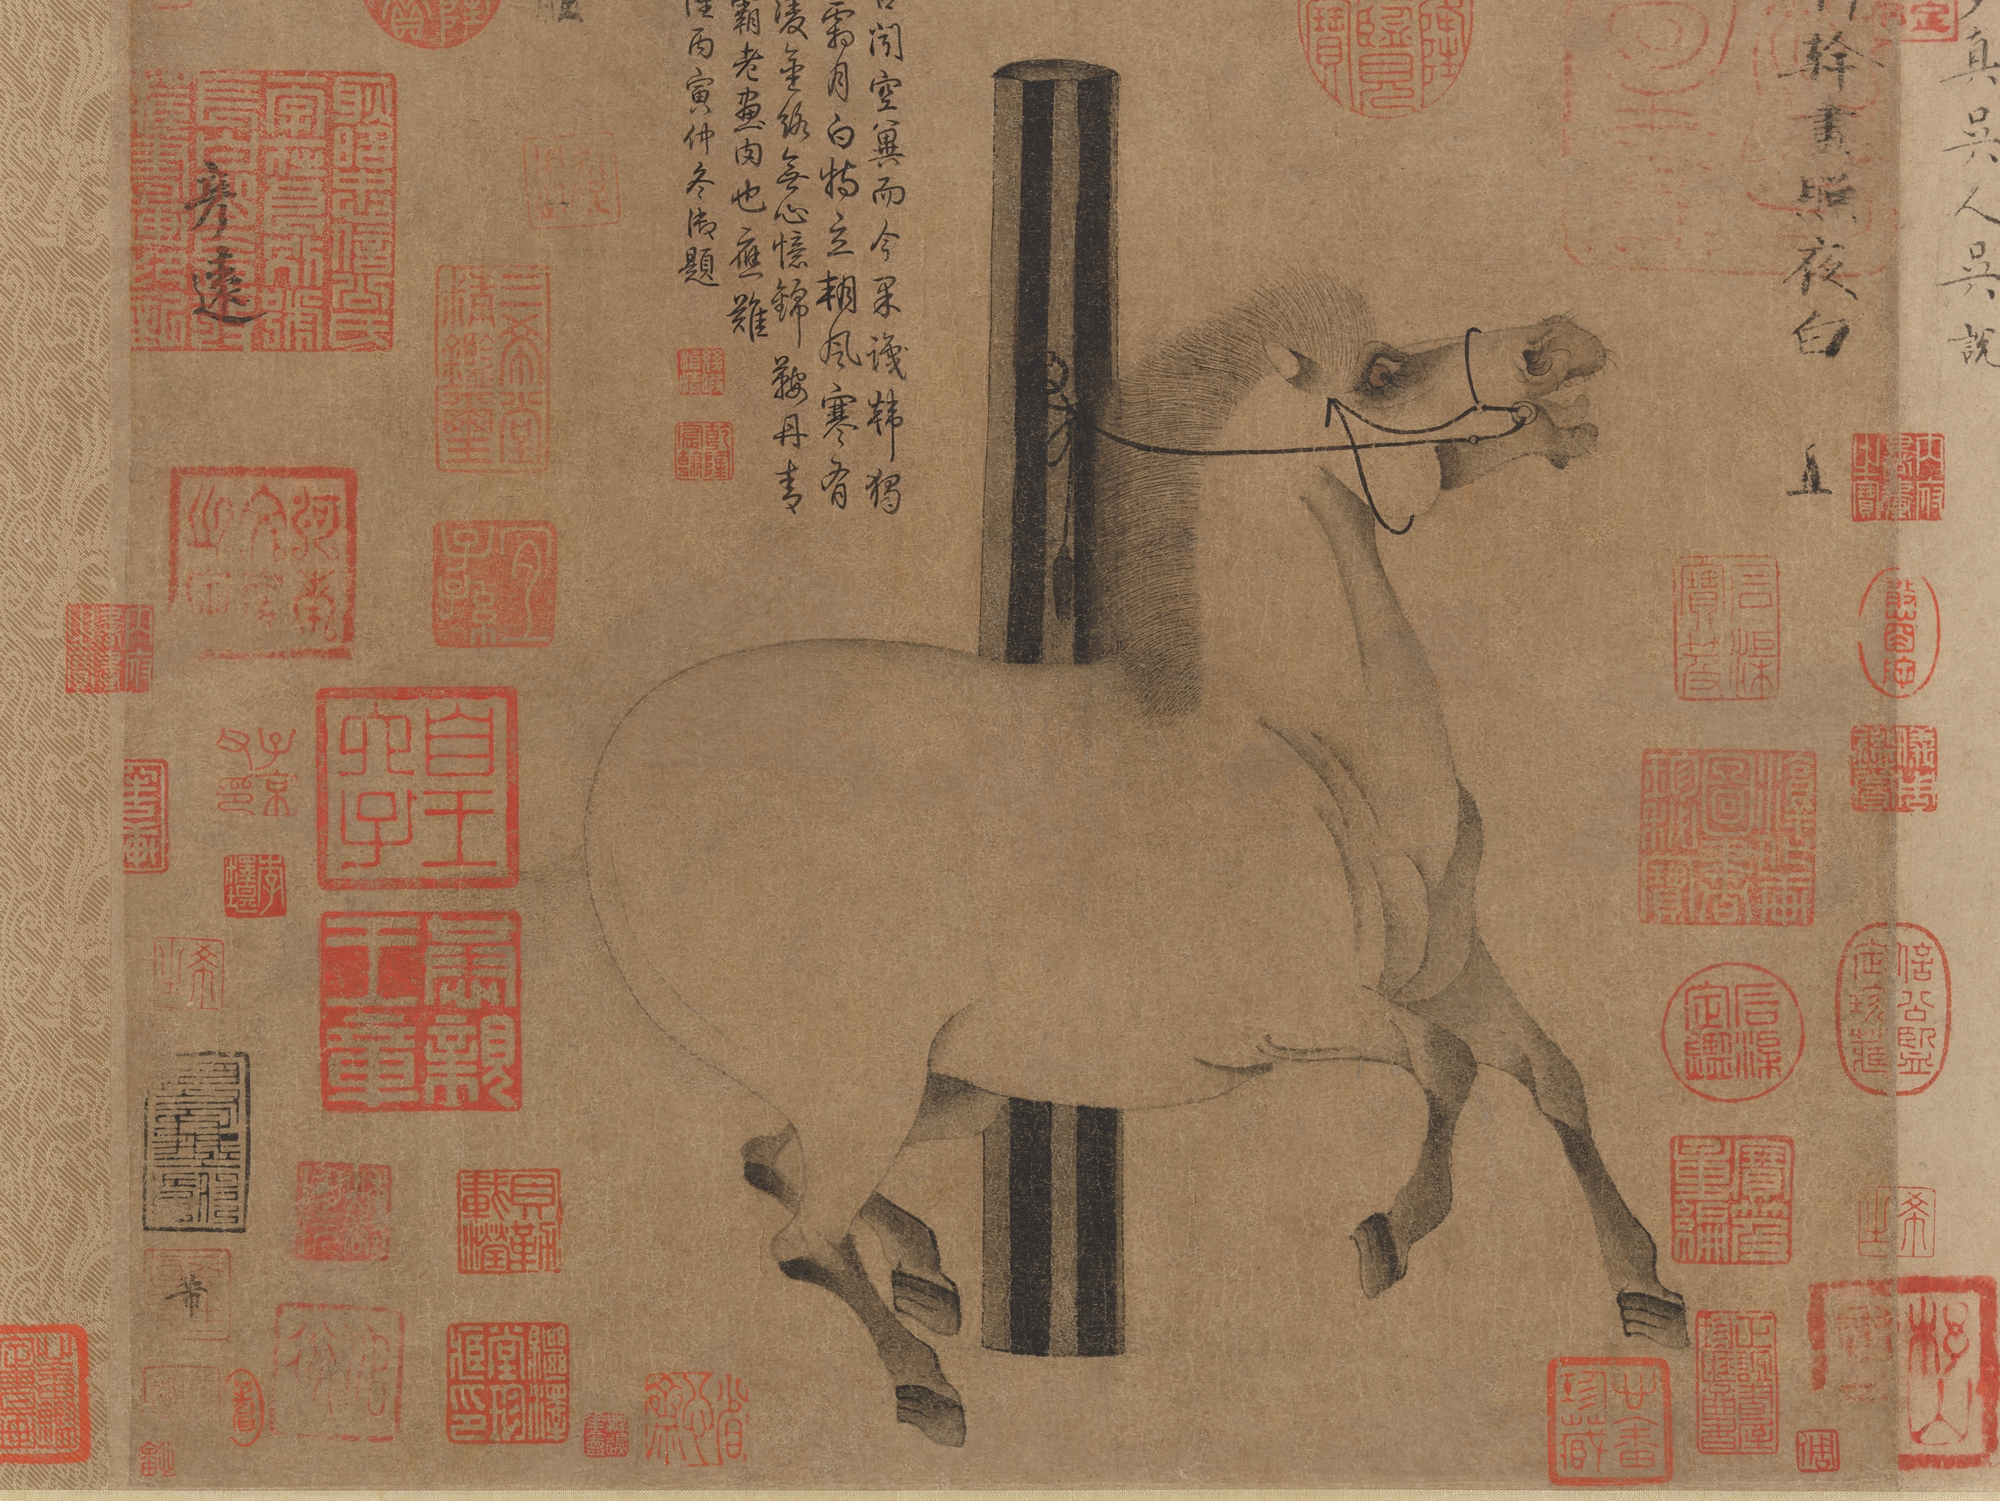 Han Gan, Night-Shining White, c. 750, Tang Dynasty, China, ink on paper, 30.8 x 34 cm (The Metropolitan Museum of Art)